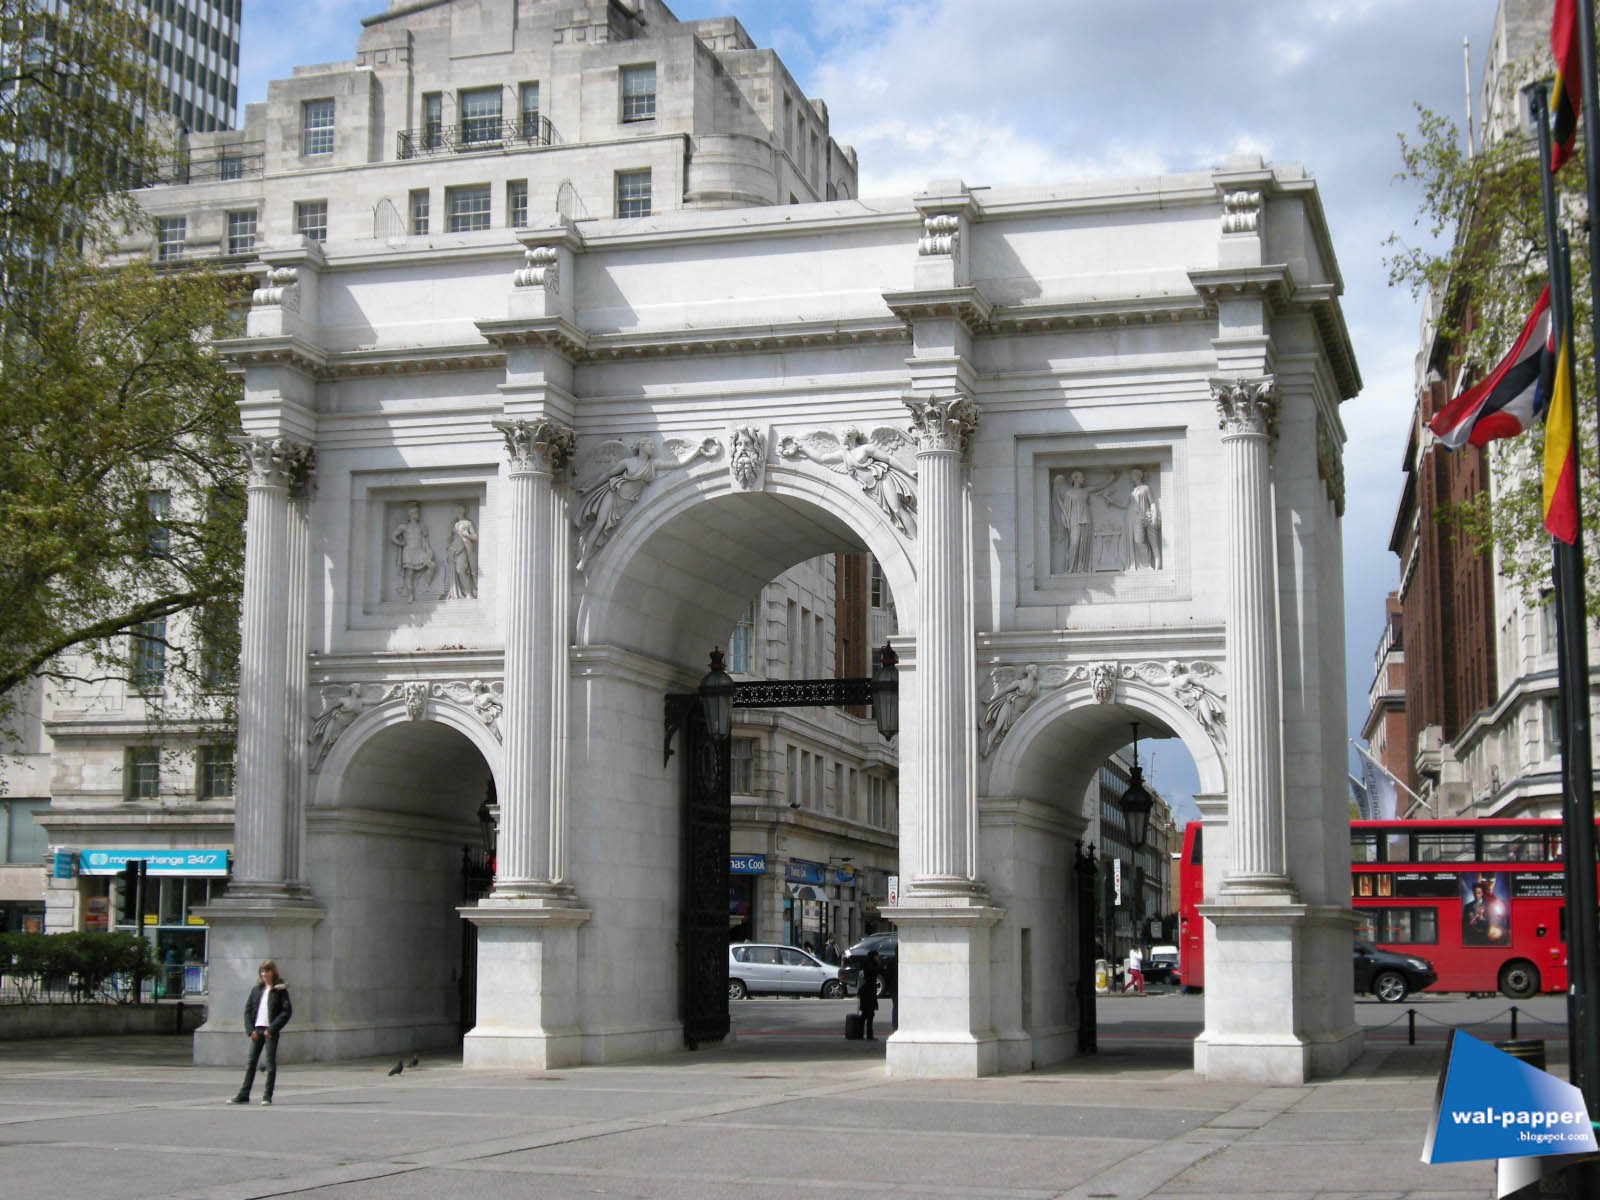 Арка актера. Мраморная арка Hyde Park. Букингемский дворец мраморная арка. Триумфальная арка в Лондоне. Арка Веллингтона.